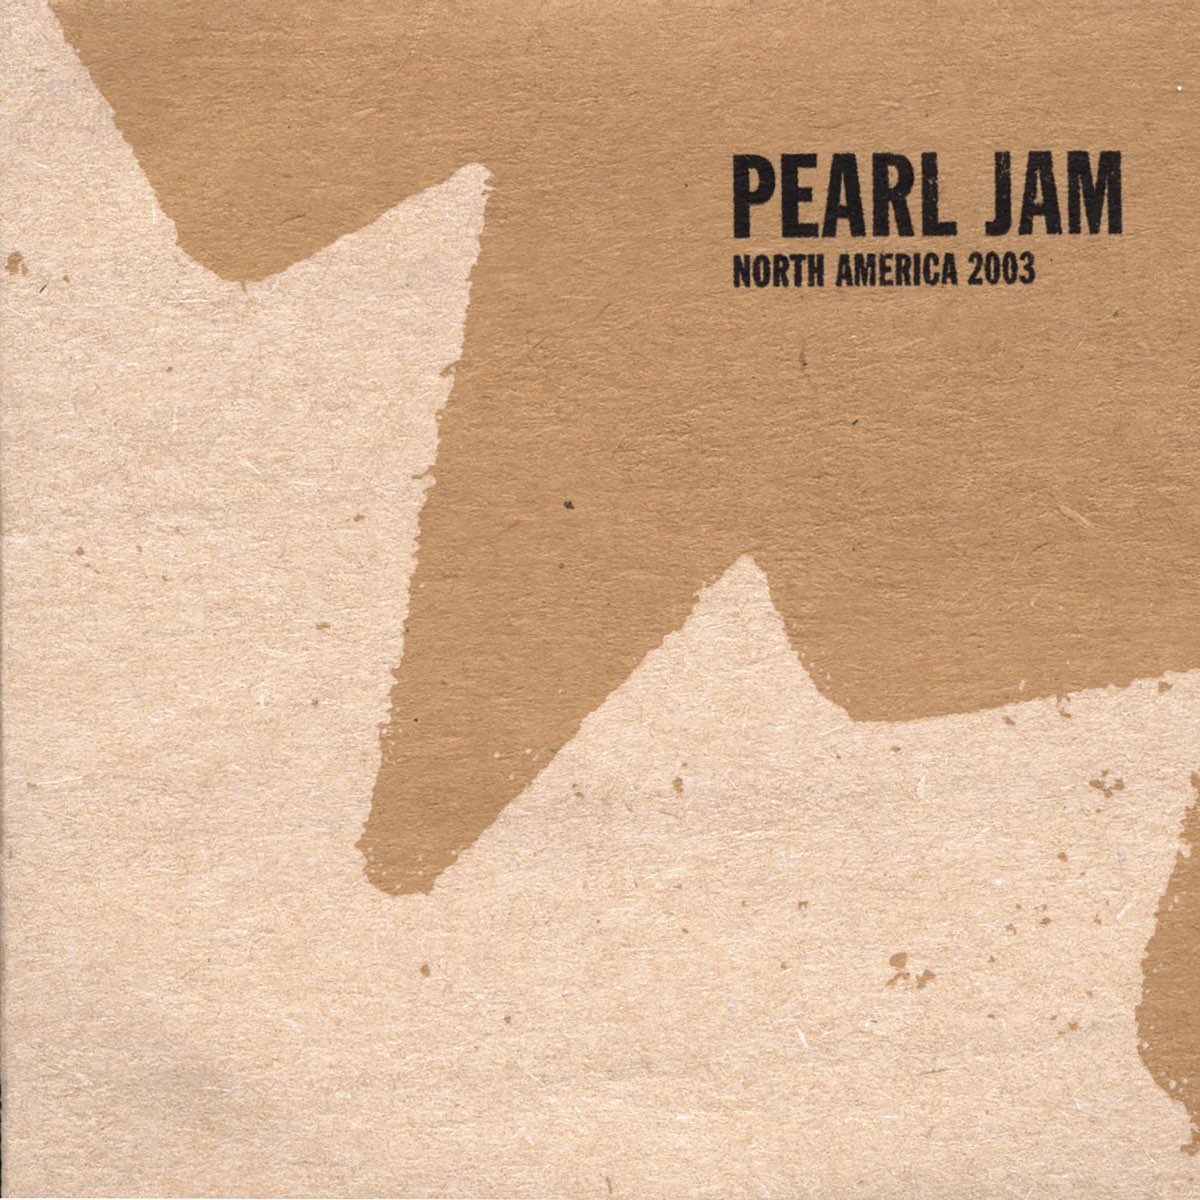 Pearl jam слушать. Pearl Jam обложка. Pearl Jam North. Pearl Jam в шапке. Pearl Jam {музыка}.